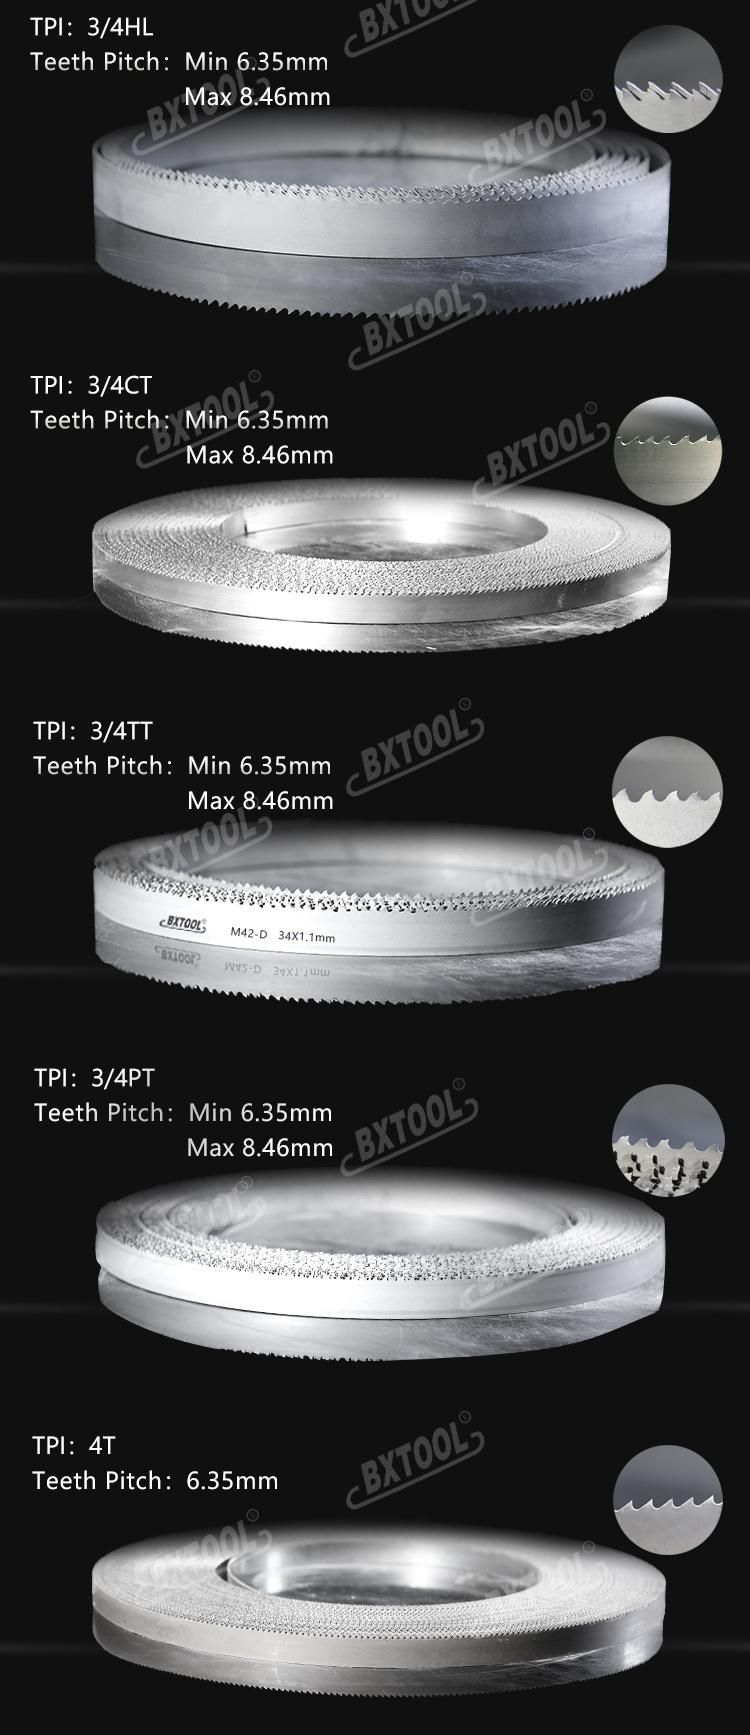 Bxtool M42-D Bimetal Band Saw Blade 34mm*1.1 (1 1/4*0.042 inch) for Cutting Metal